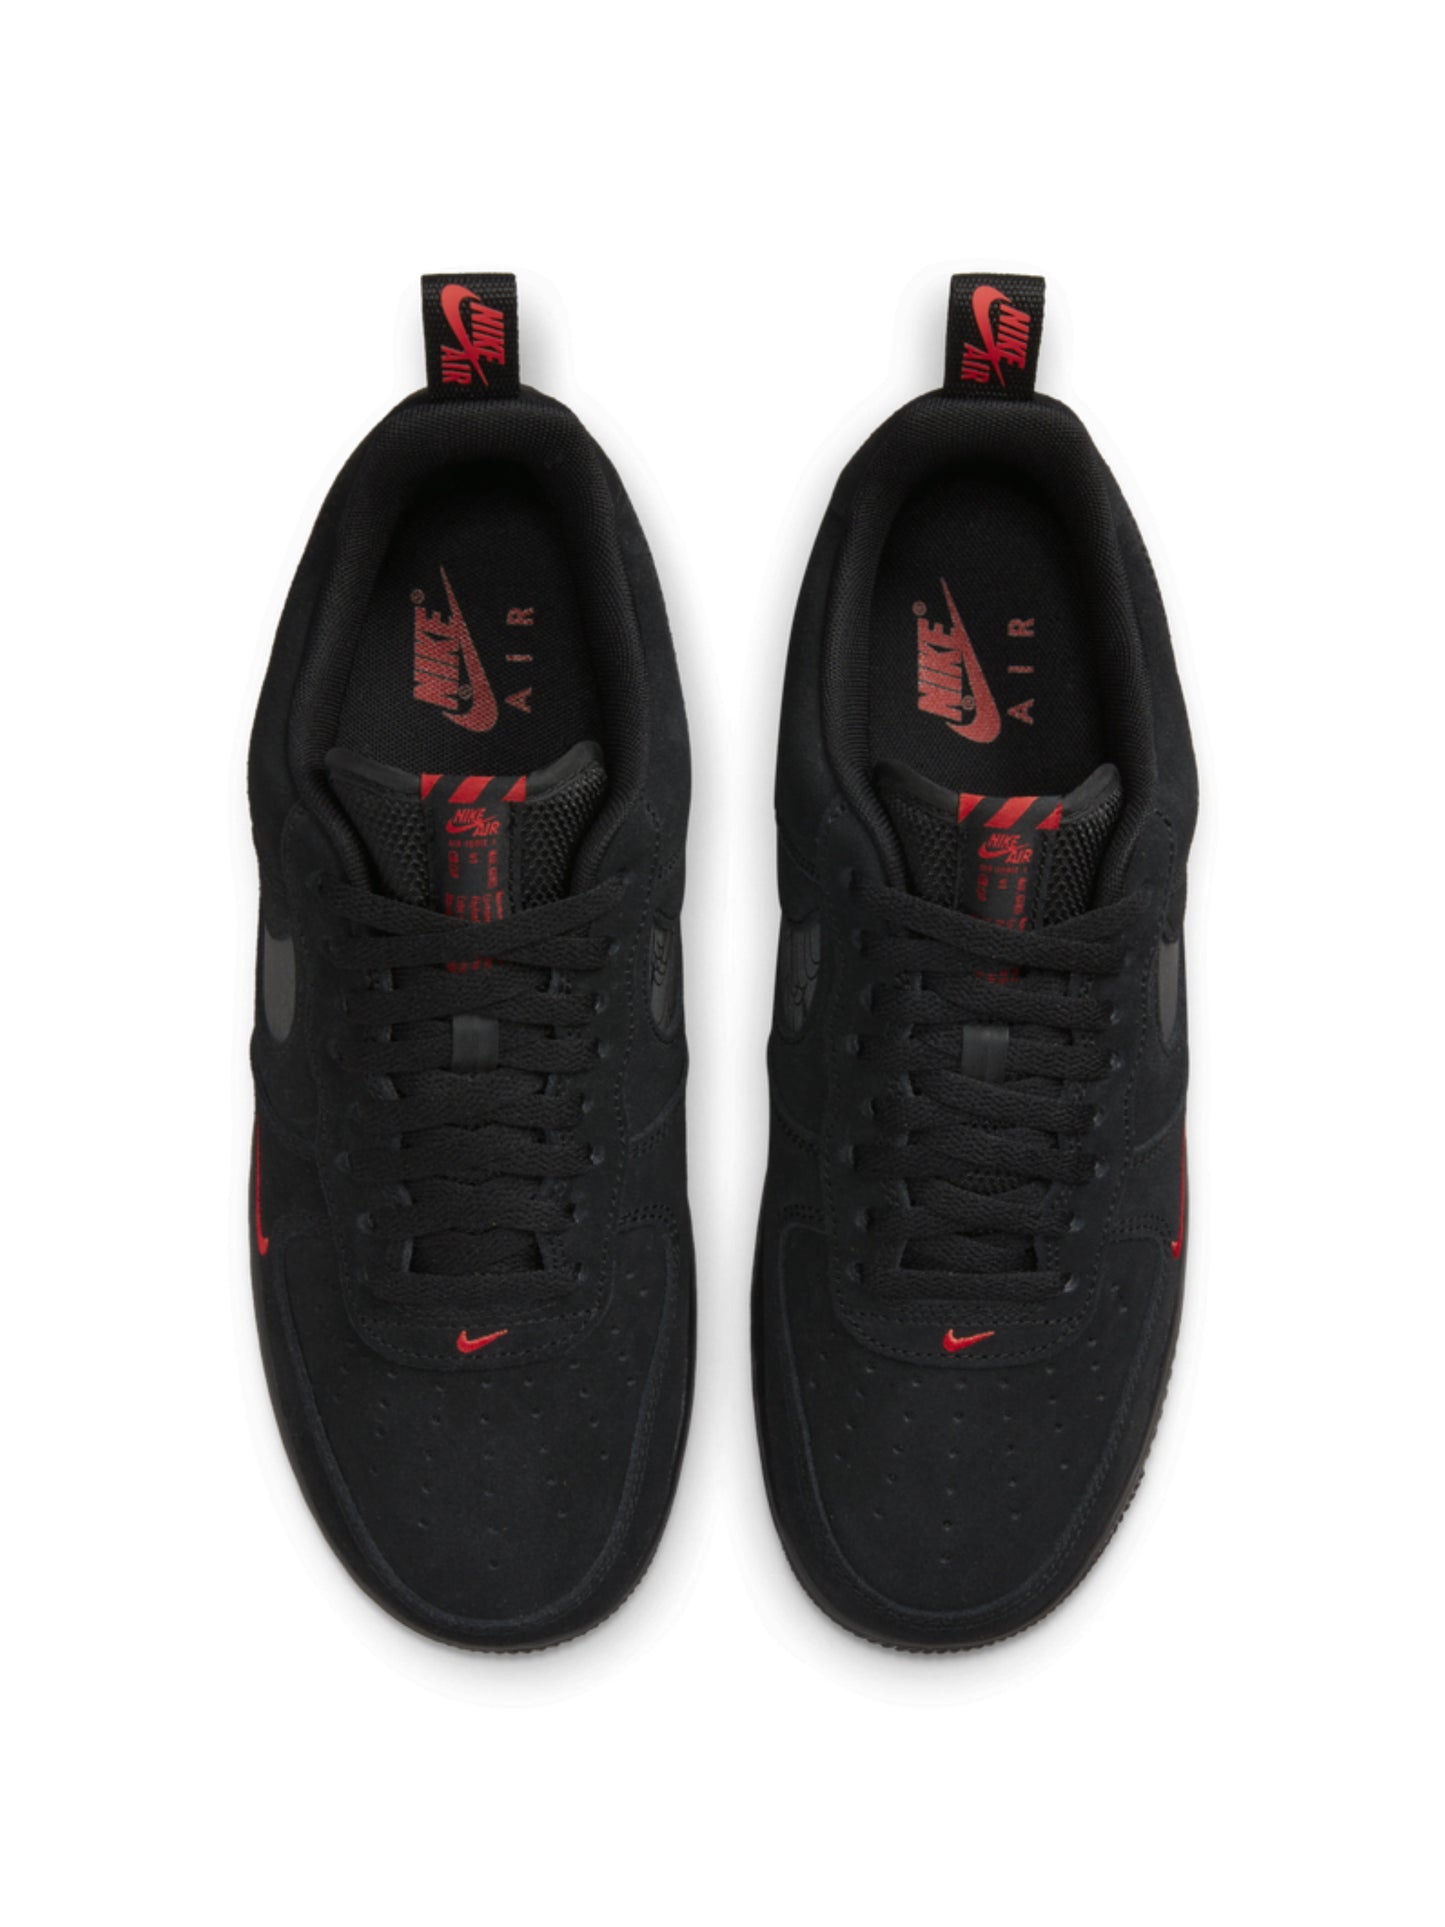 Nike Air Force 1 Low multi Swoosh black/red